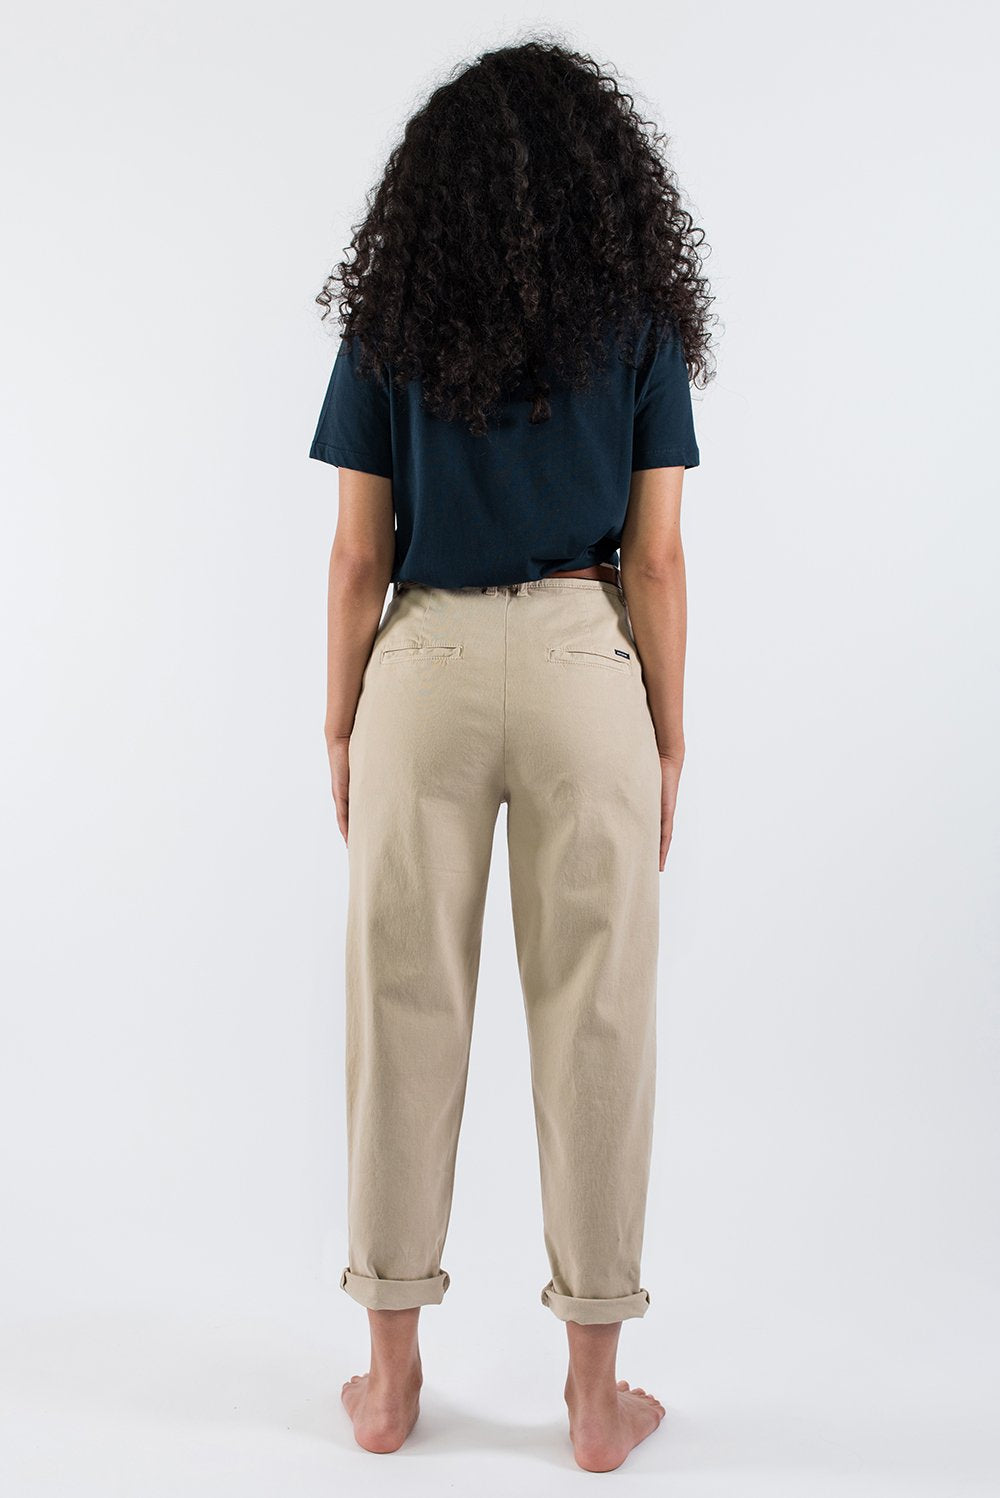 Pantalone 100% Cotone Biologico GOTS - Lara Sand - Caminaròli Ethical Fashion